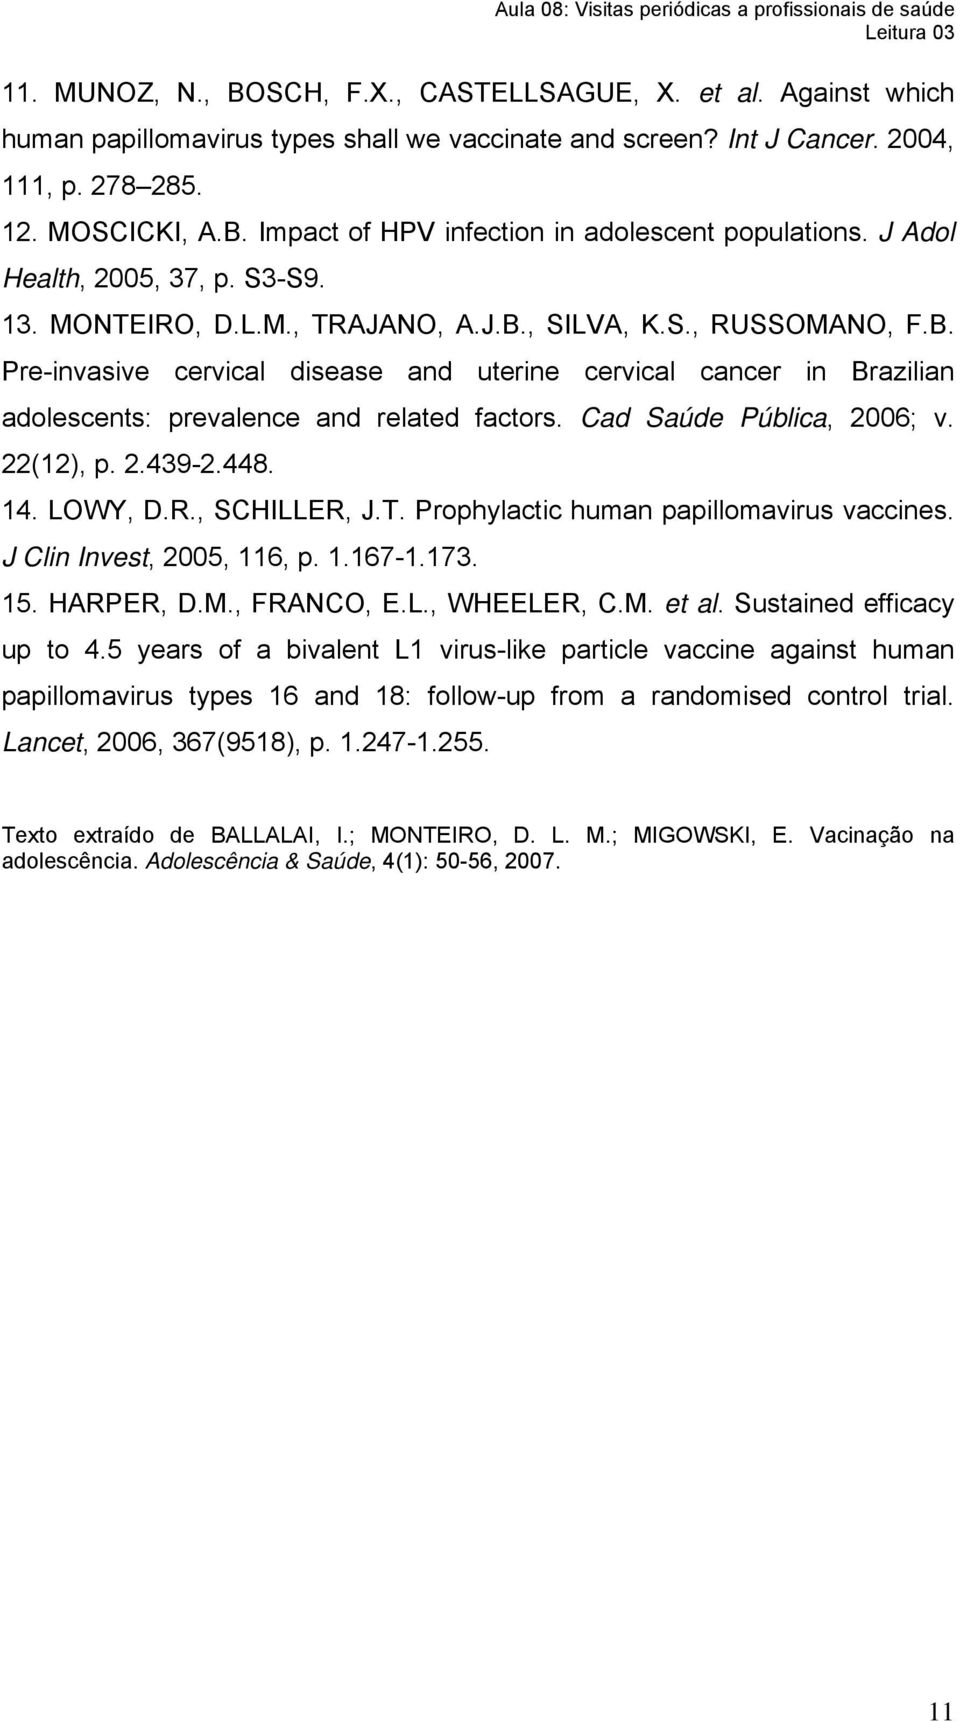 Cad Saúde Pública, 2006; v. 22(12), p. 2.439-2.448. 14. LOWY, D.R., SCHILLER, J.T. Prophylactic human papillomavirus vaccines. J Clin Invest, 2005, 116, p. 1.167-1.173. 15. HARPER, D.M., FRANCO, E.L., WHEELER, C.